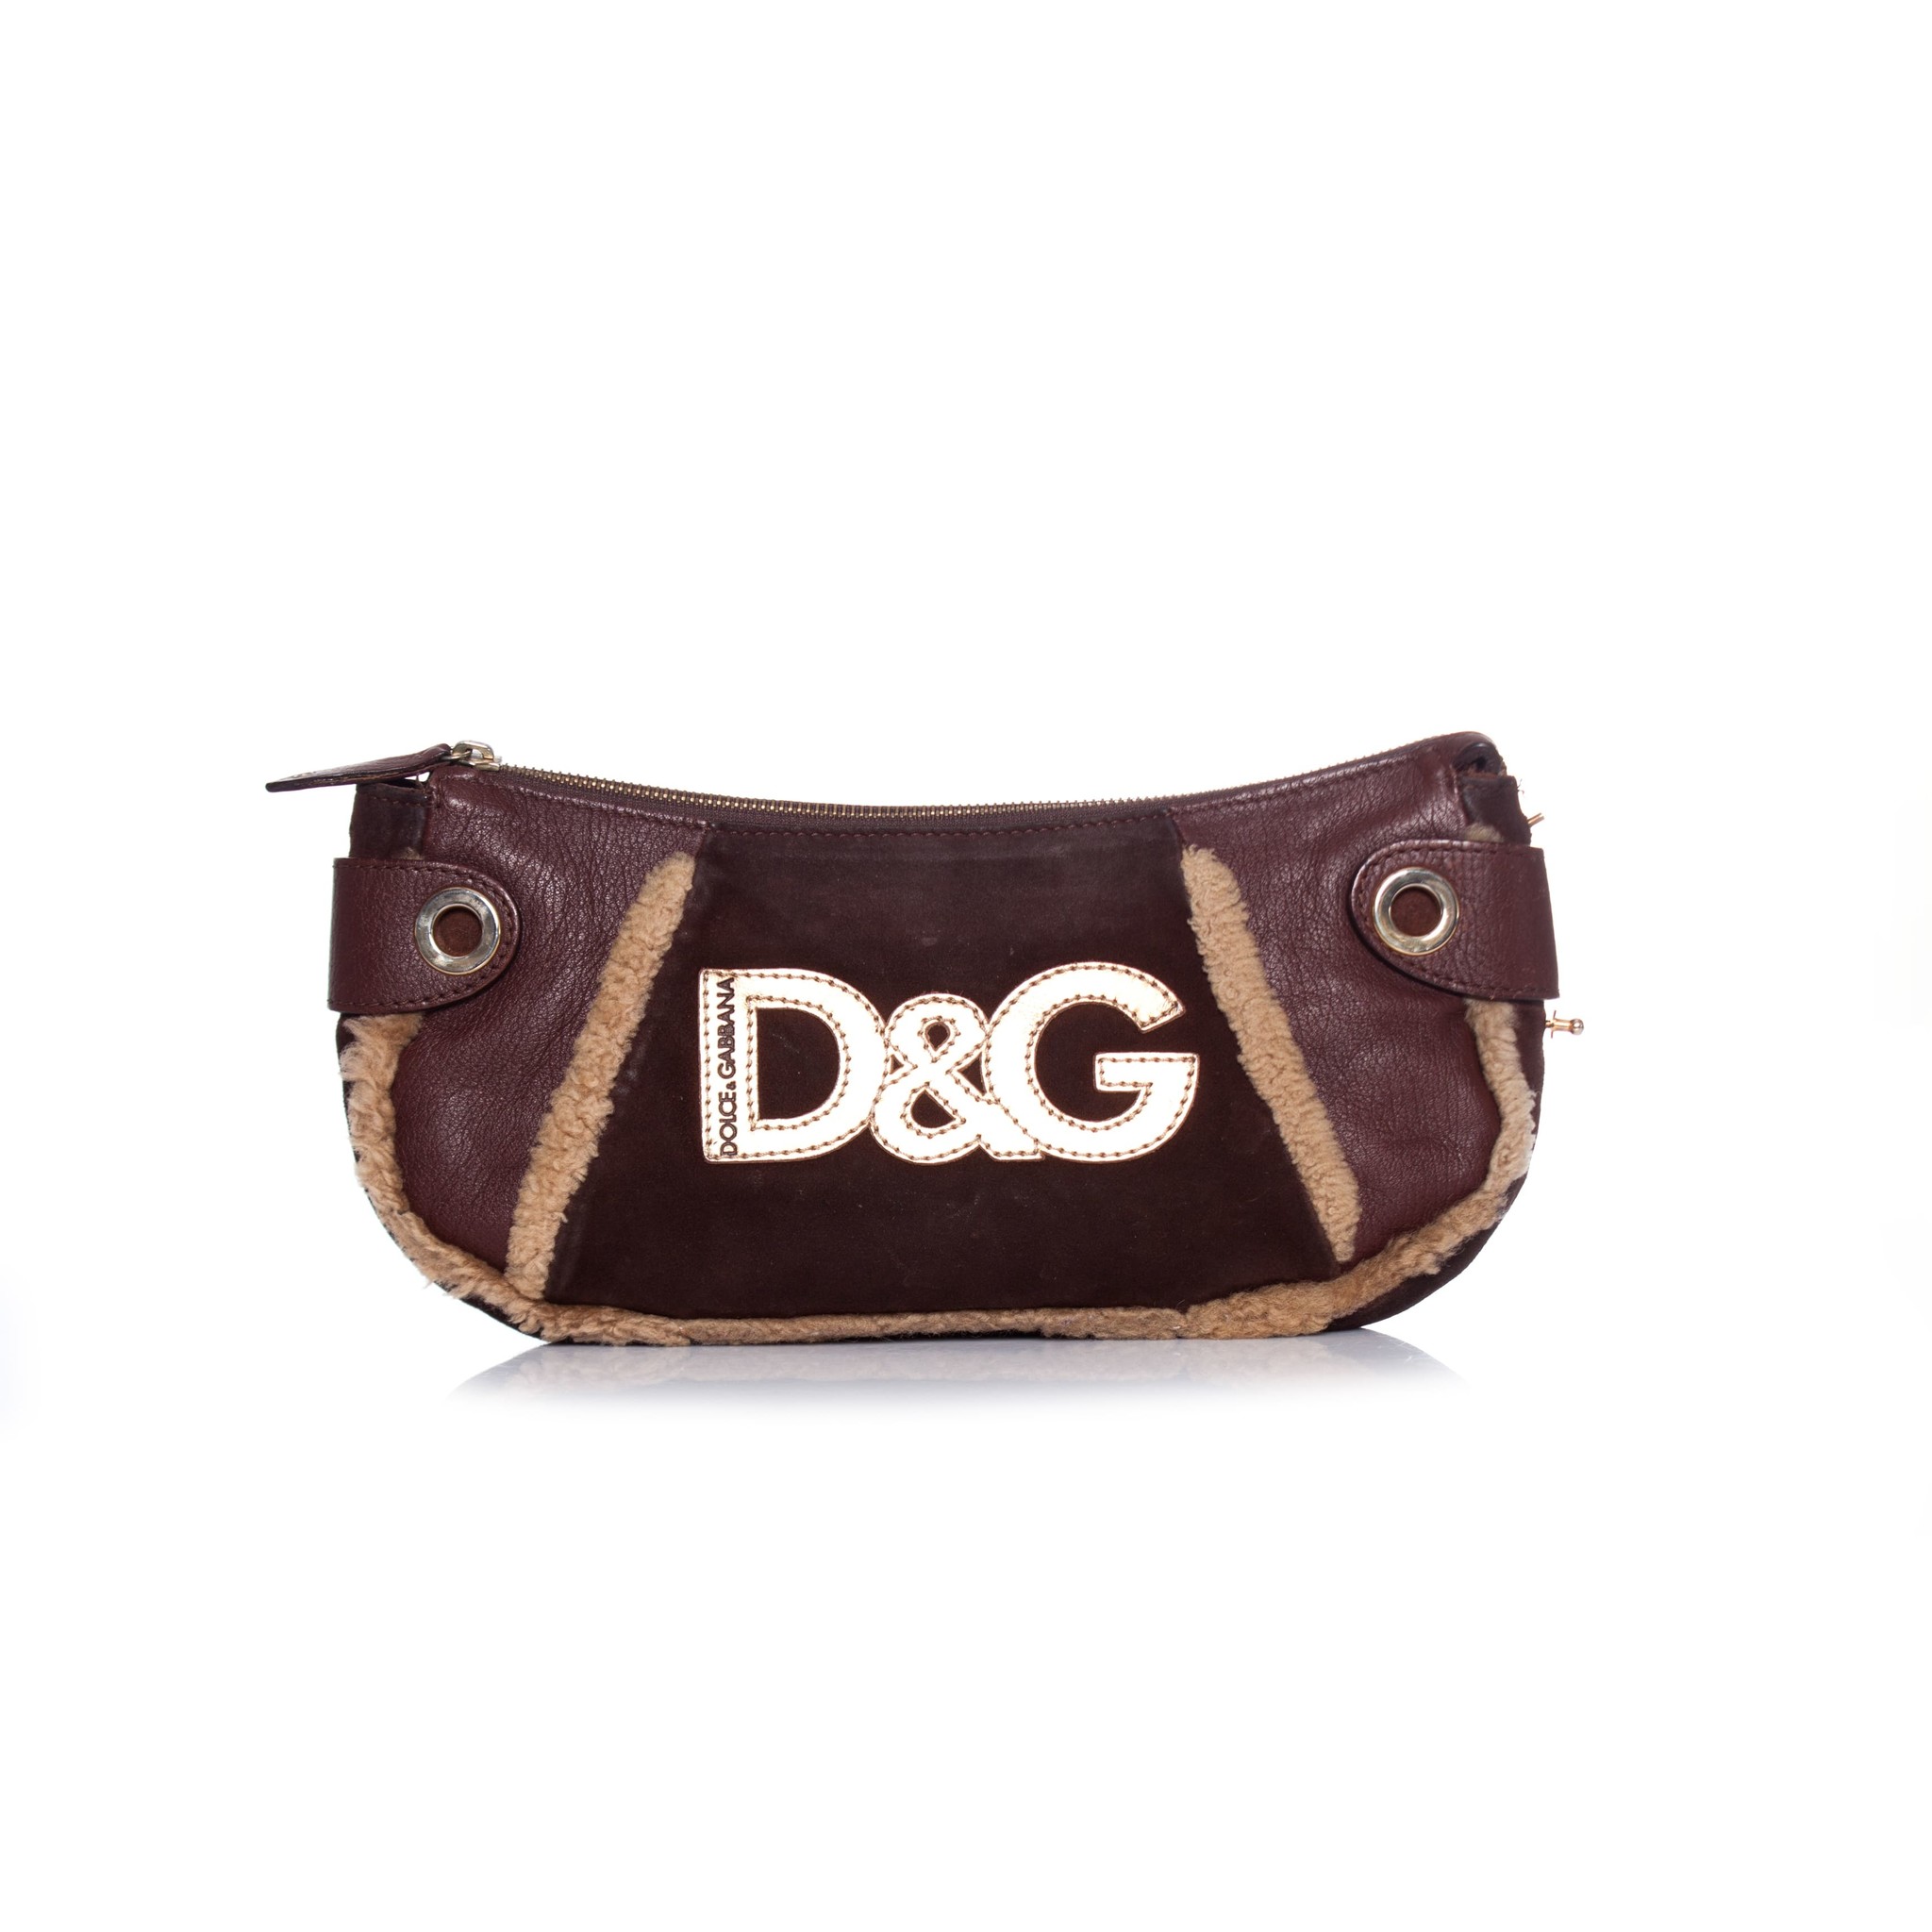 Dolce & Gabbana, Brown clutch bag - Unique Designer Pieces